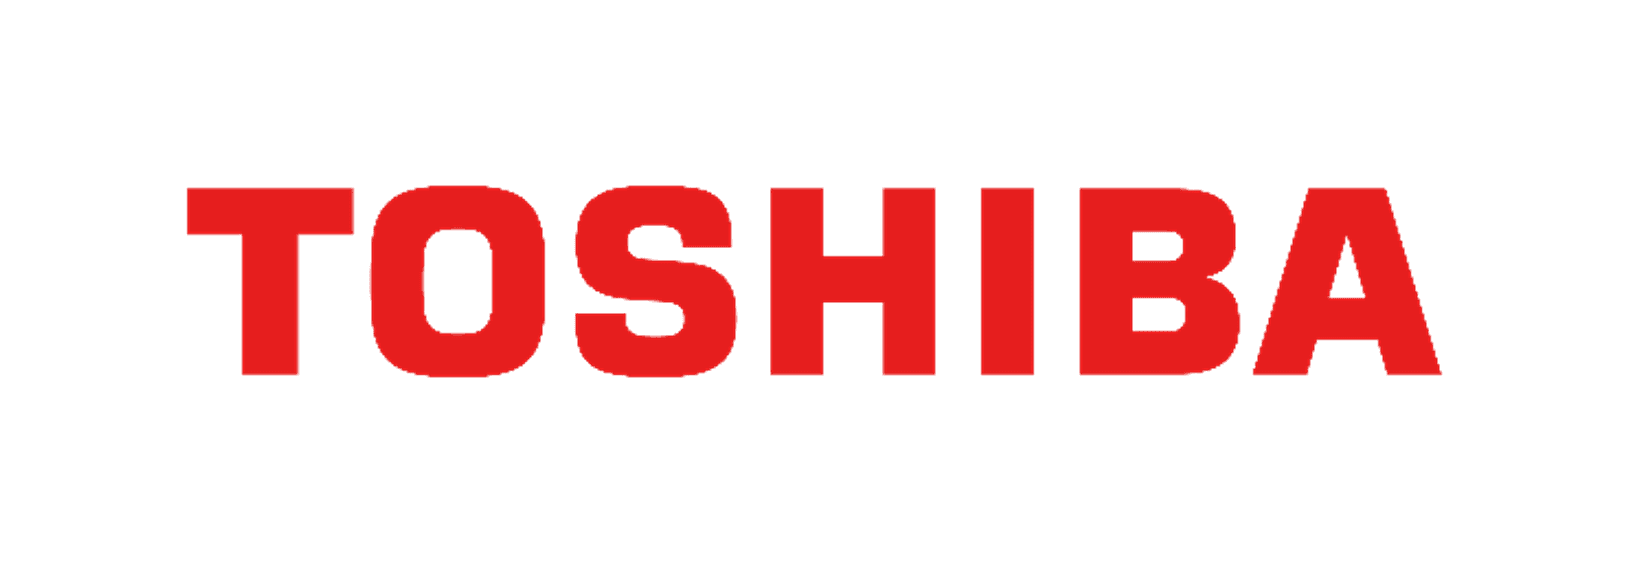 TOSHIBA Corporation logo